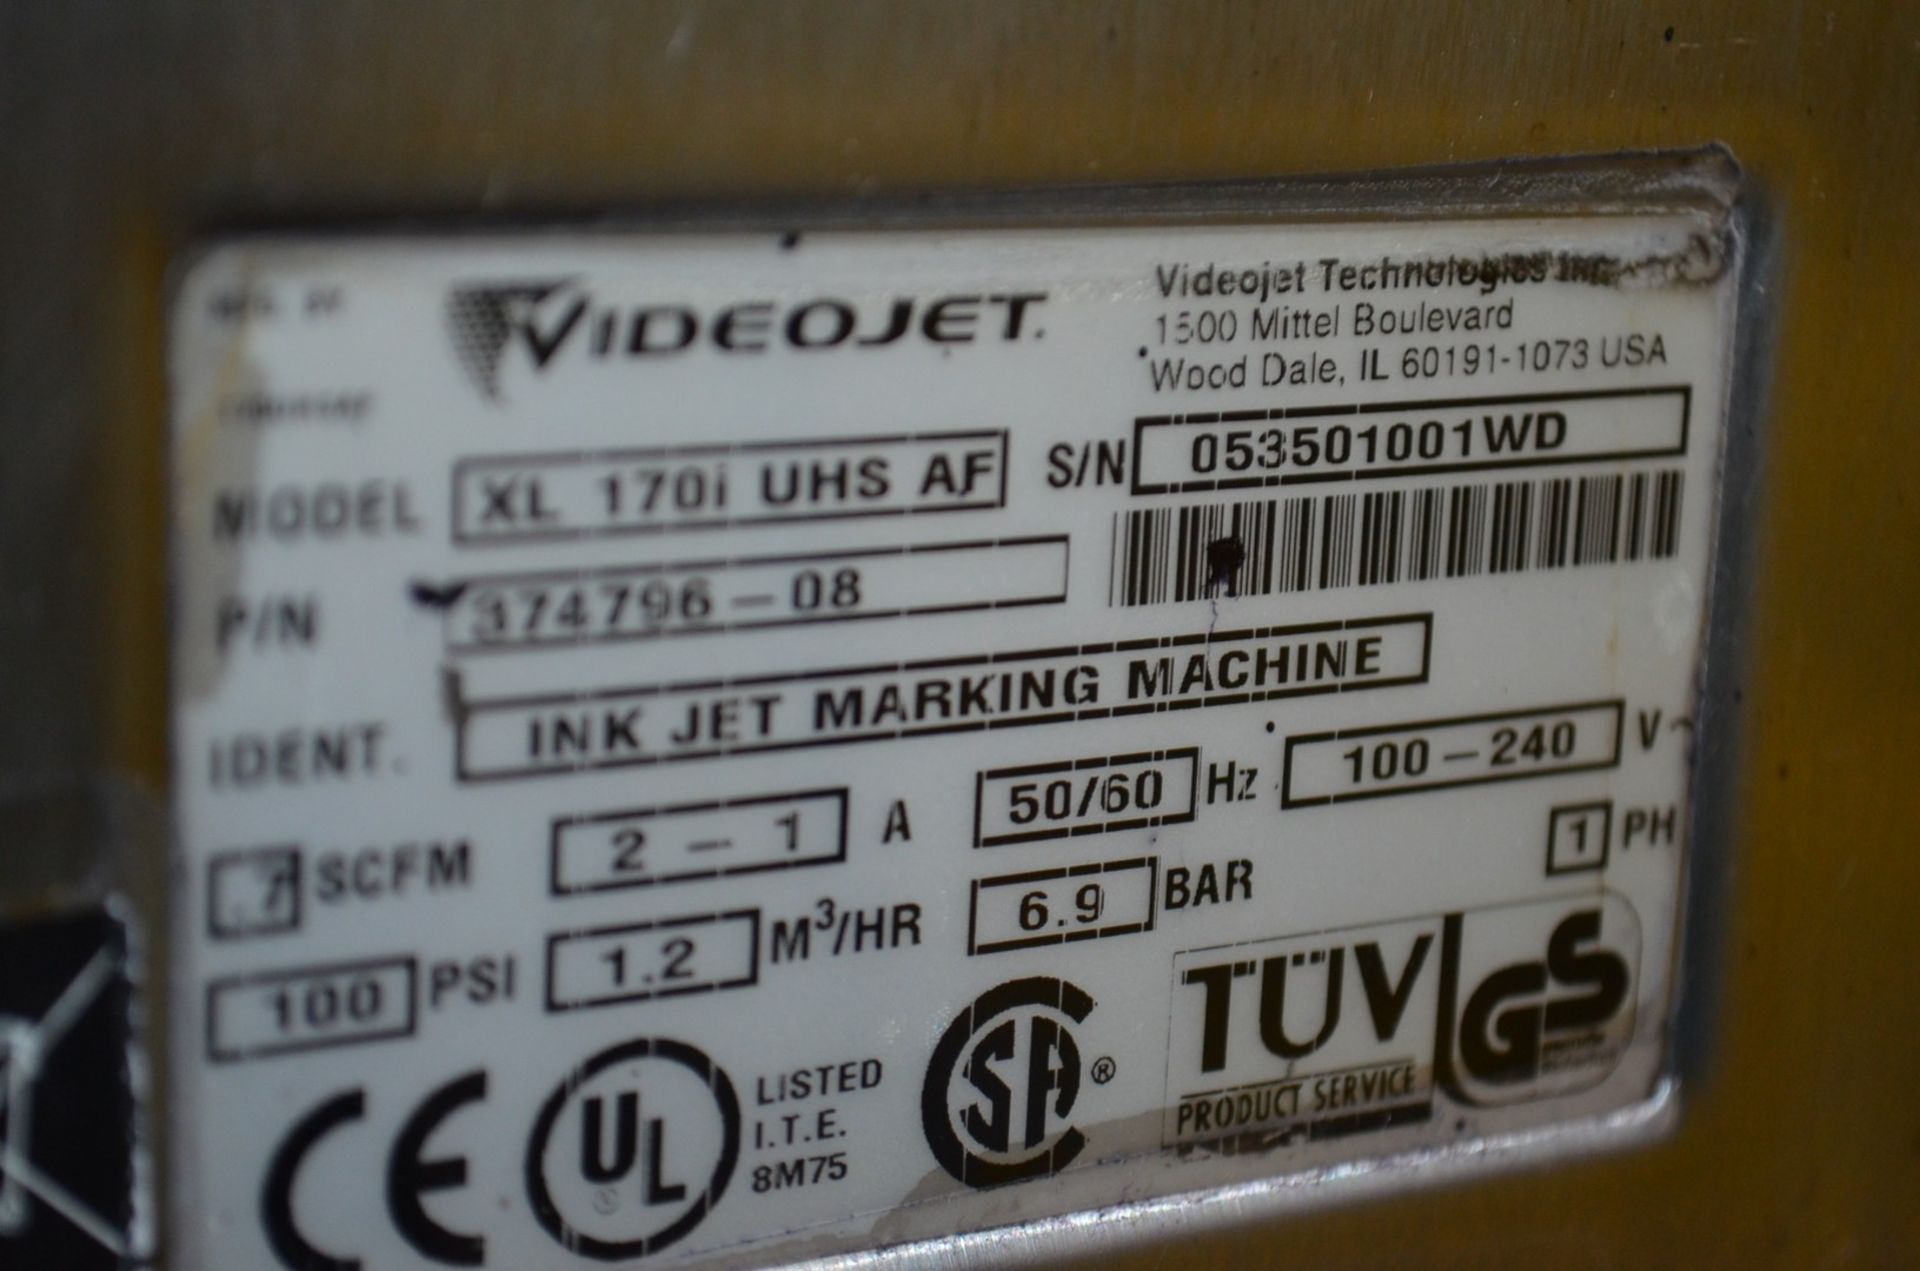 Videojet XL170iUHSAF Inkjet Coders; Location in Plant: Maintenance/ Storage Area - Image 9 of 10